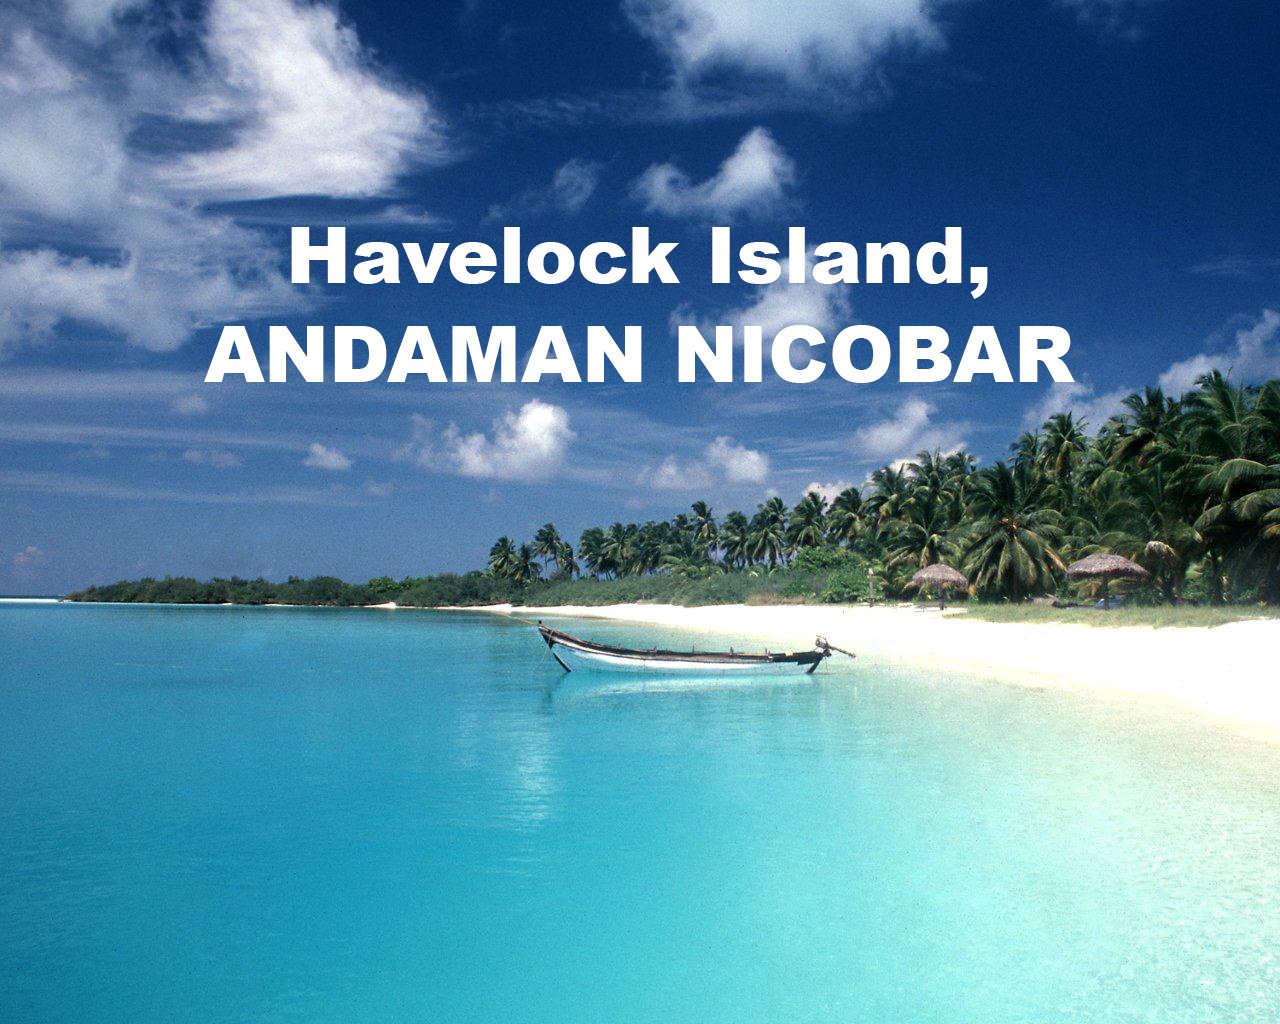 45 Havelock Island, andaman copy